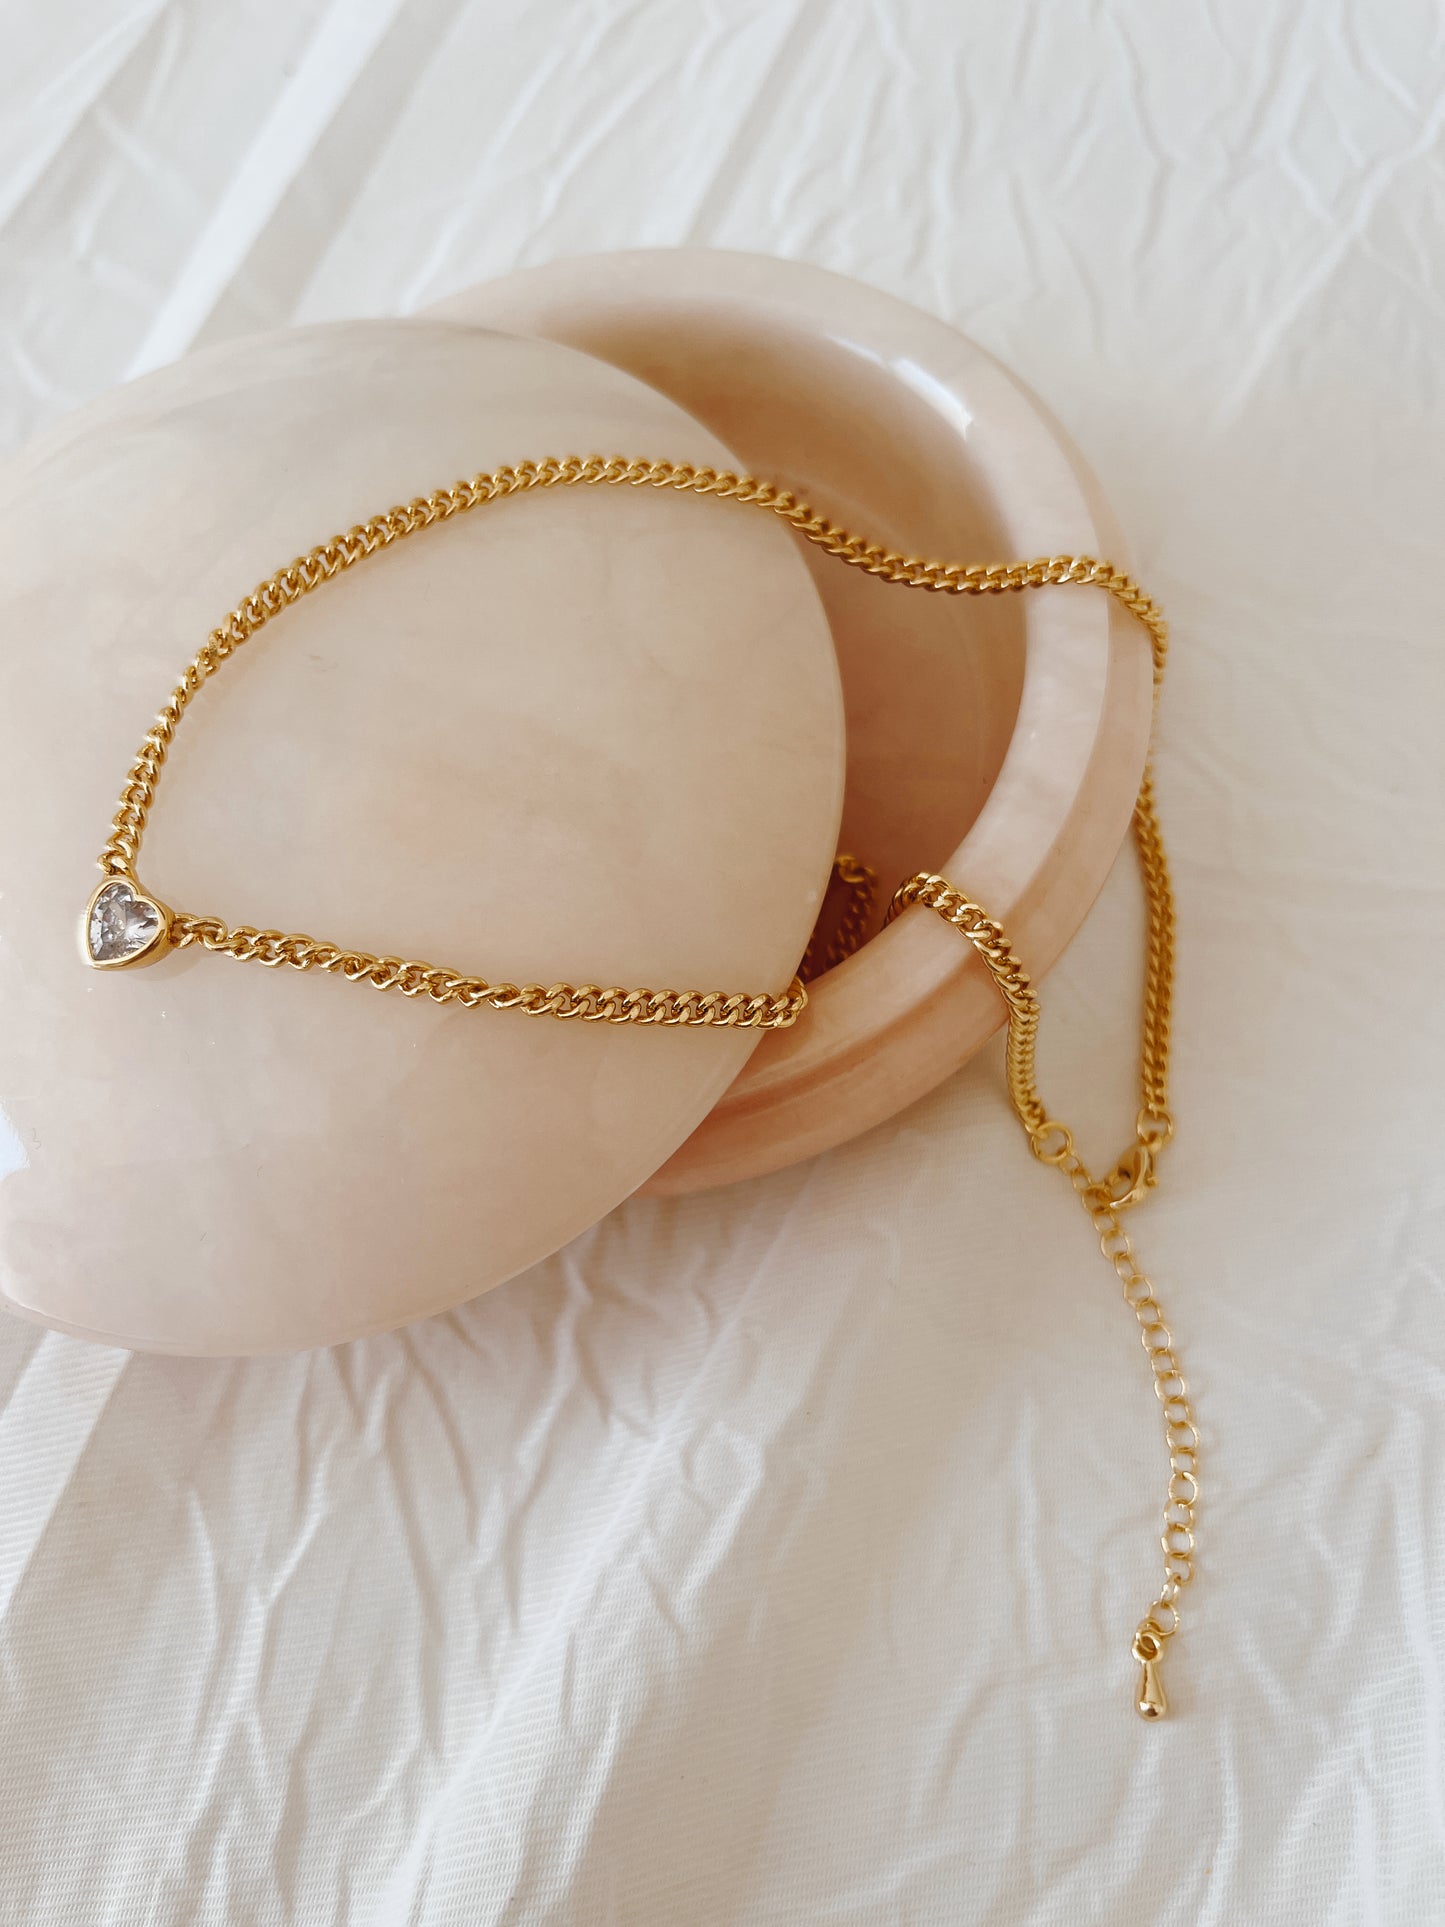 “Golden love” chain necklace